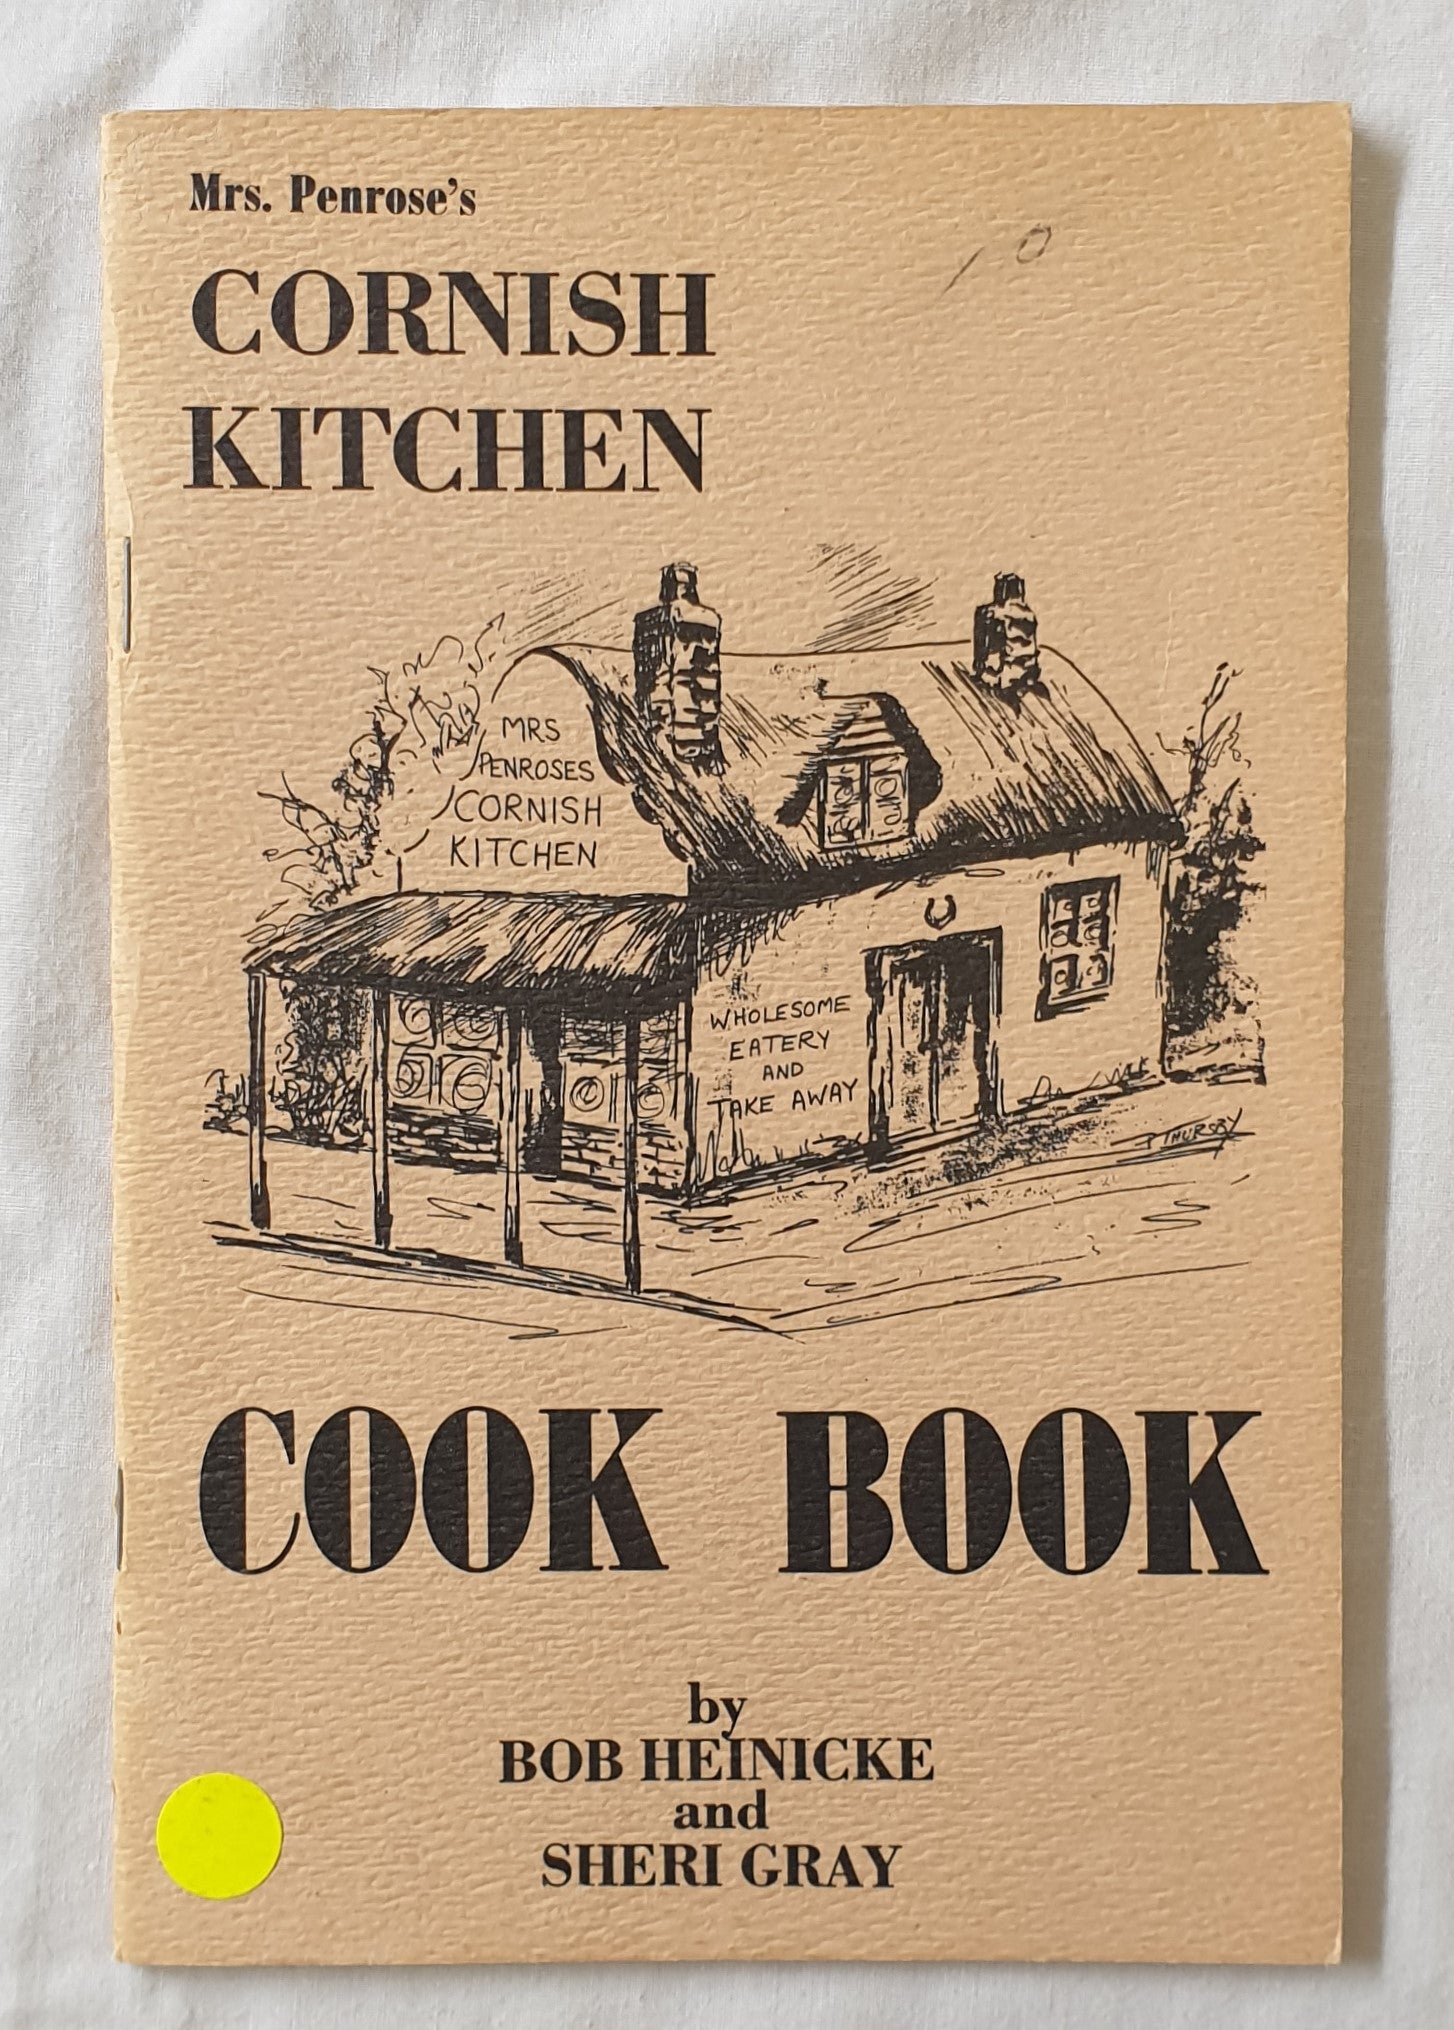 Mrs Penrose’s Cornish Kitchen  Cook Book  by Bob Heinicke and Sheri Gray